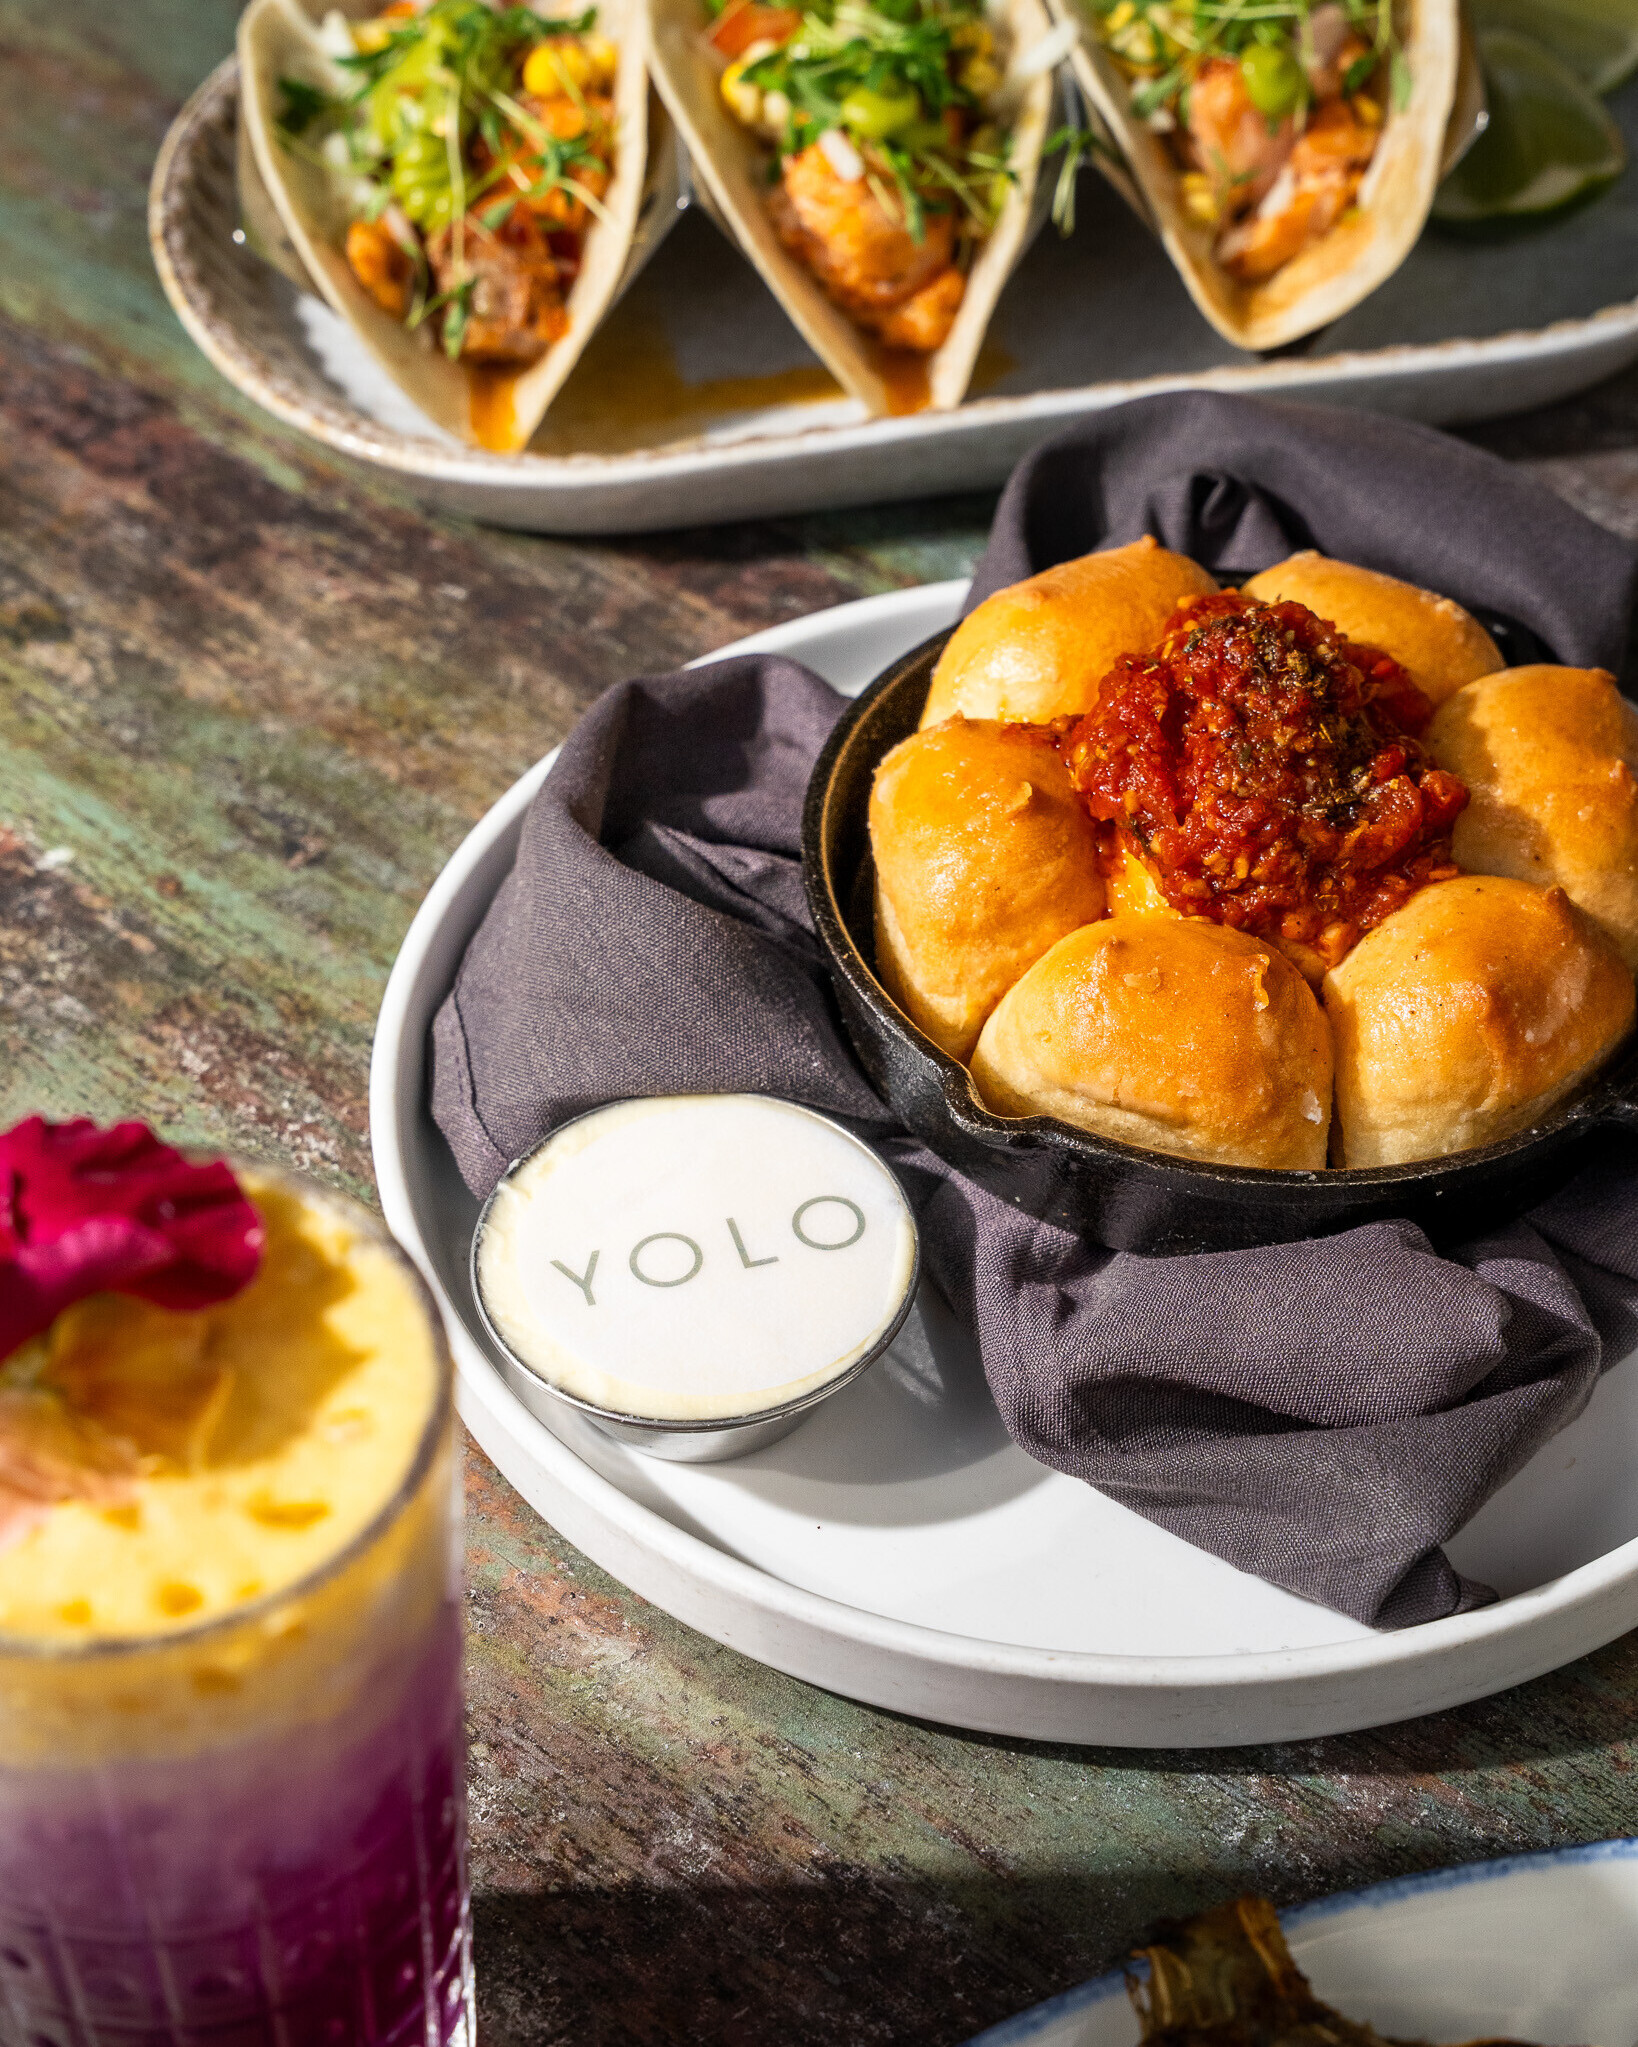 YOLO Restaurant